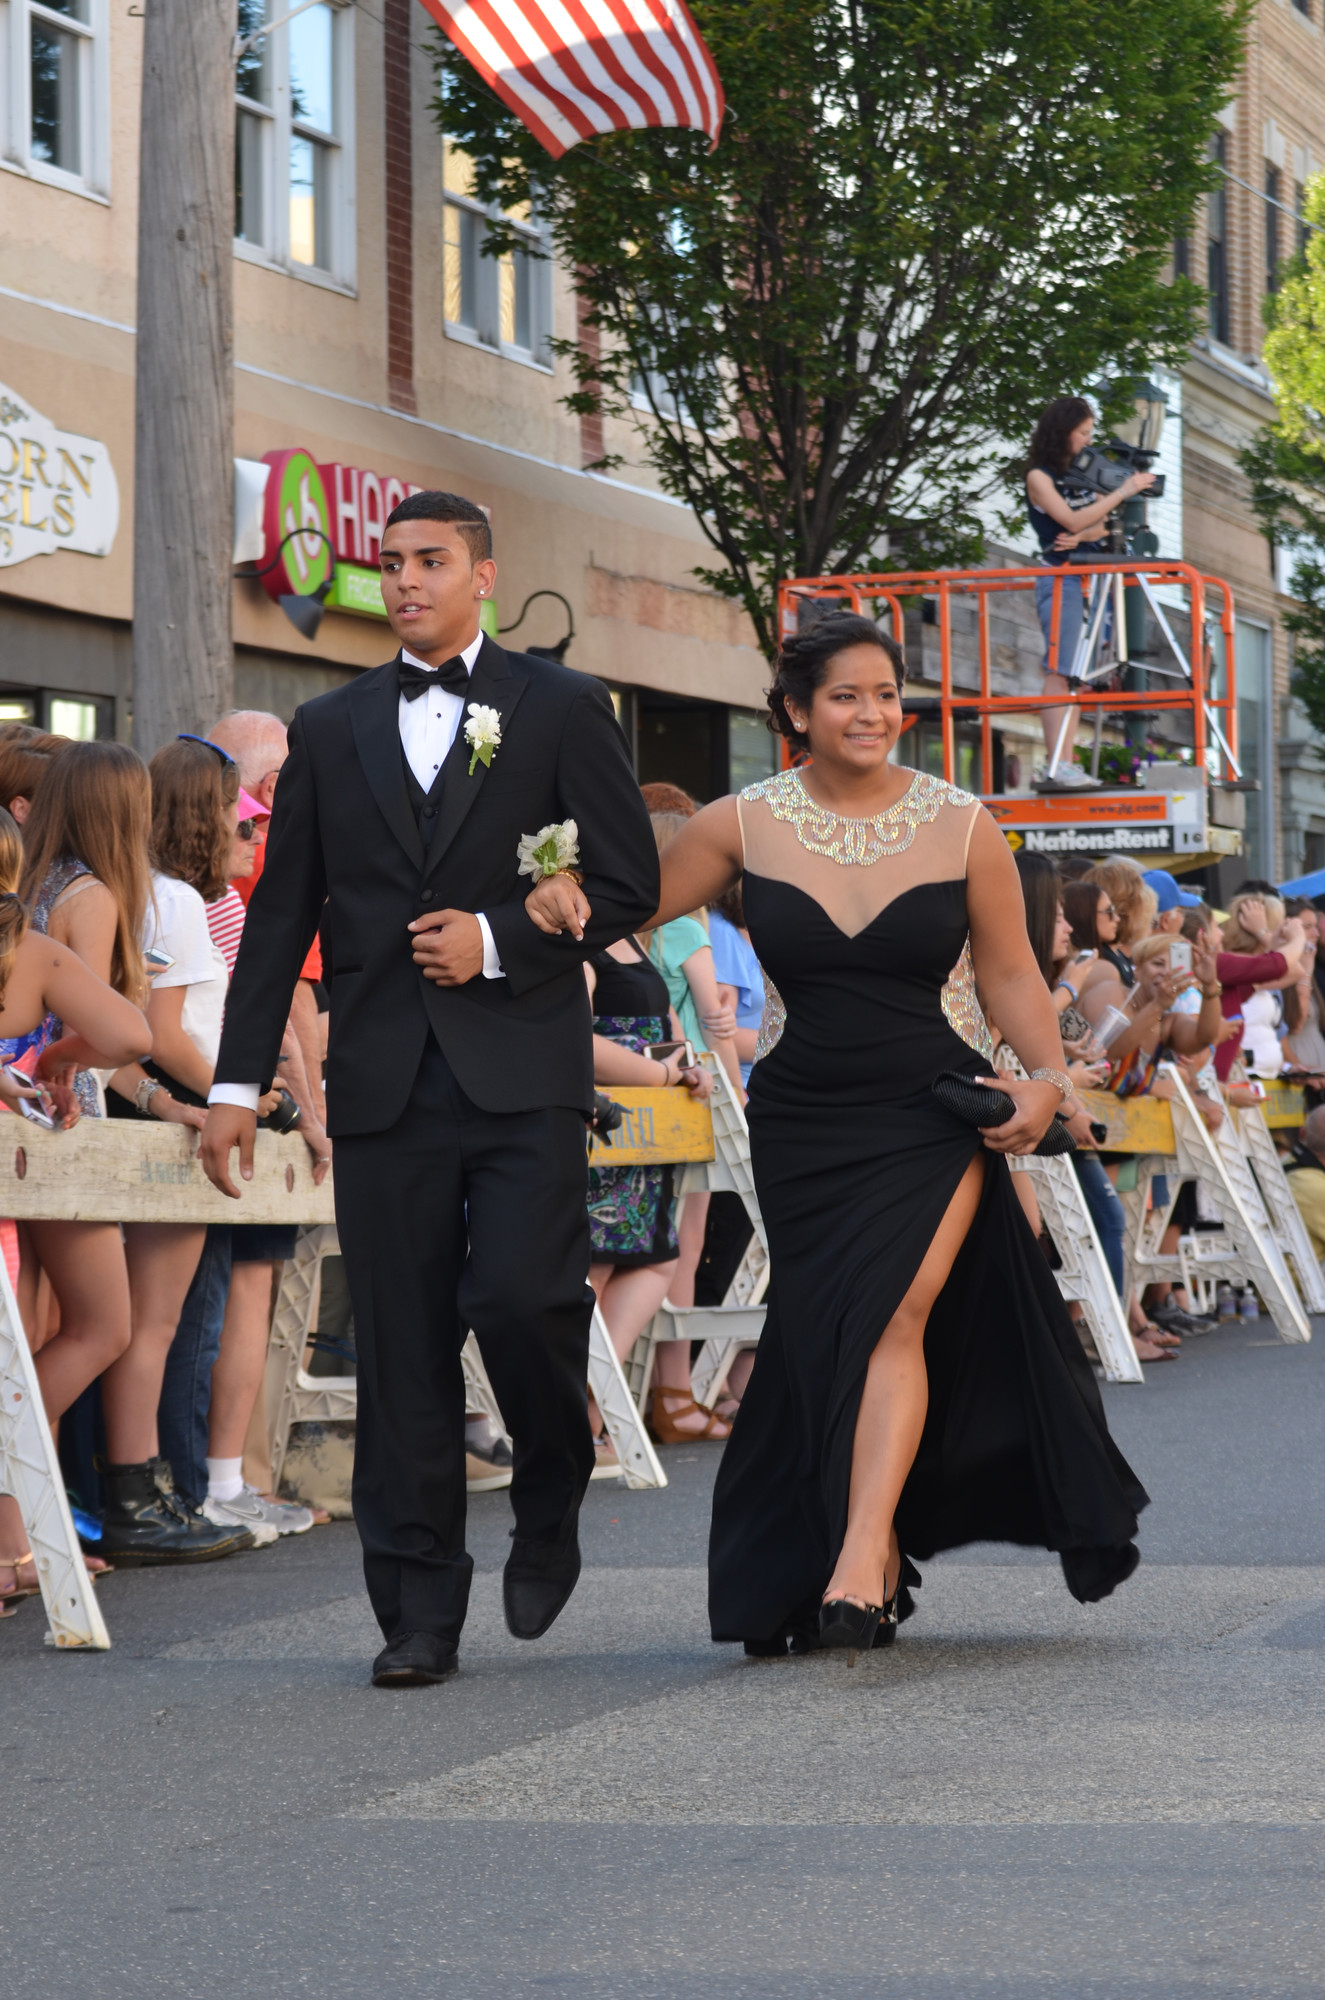 Julio Lemos and Melanie Urena promenaded down Atlantic Avenue during the pre-prom event.